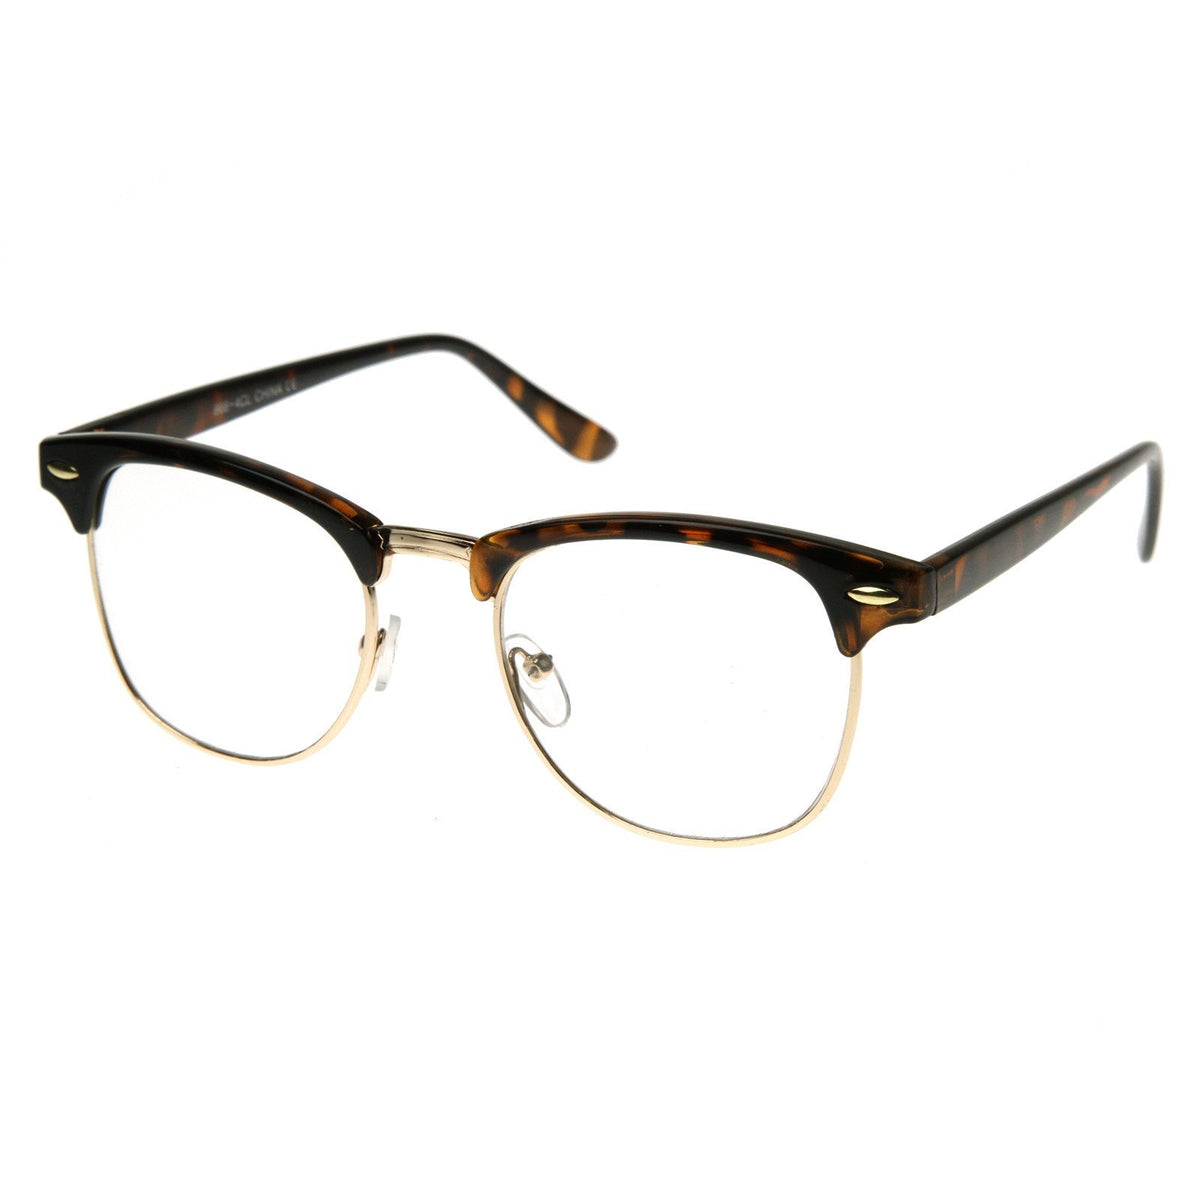 Vintage Inspired Classic Horned Rim Half Frame Clear Lens Glasses